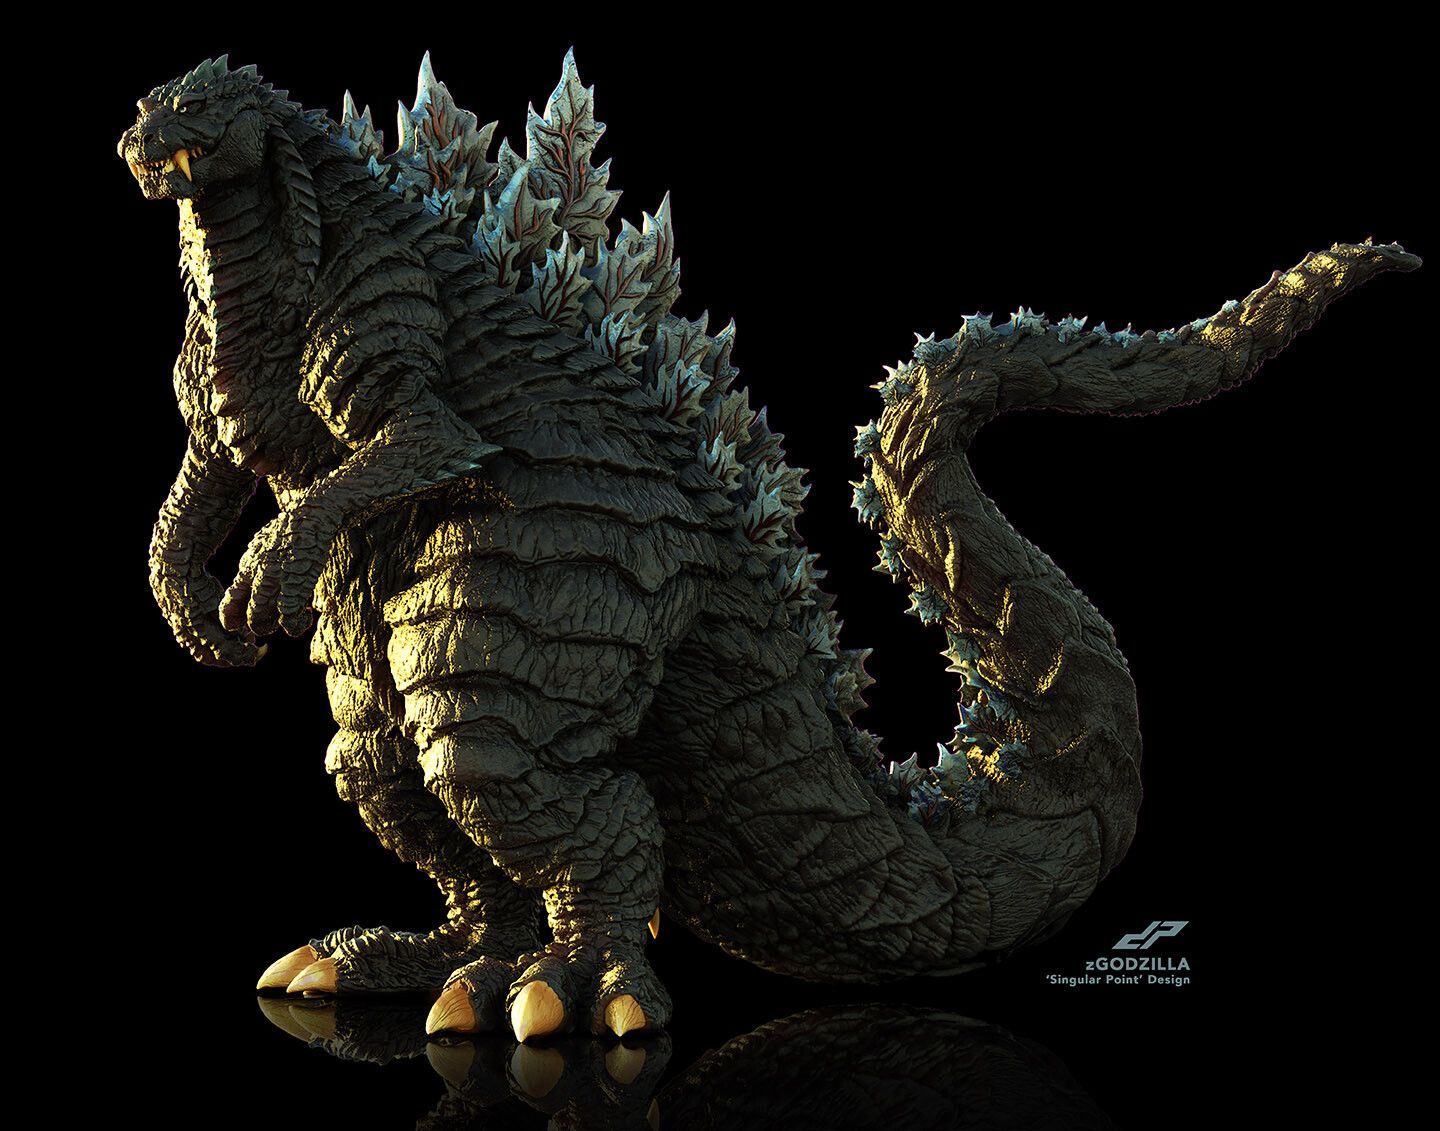 20 4K Godzilla Wallpapers  Background Images